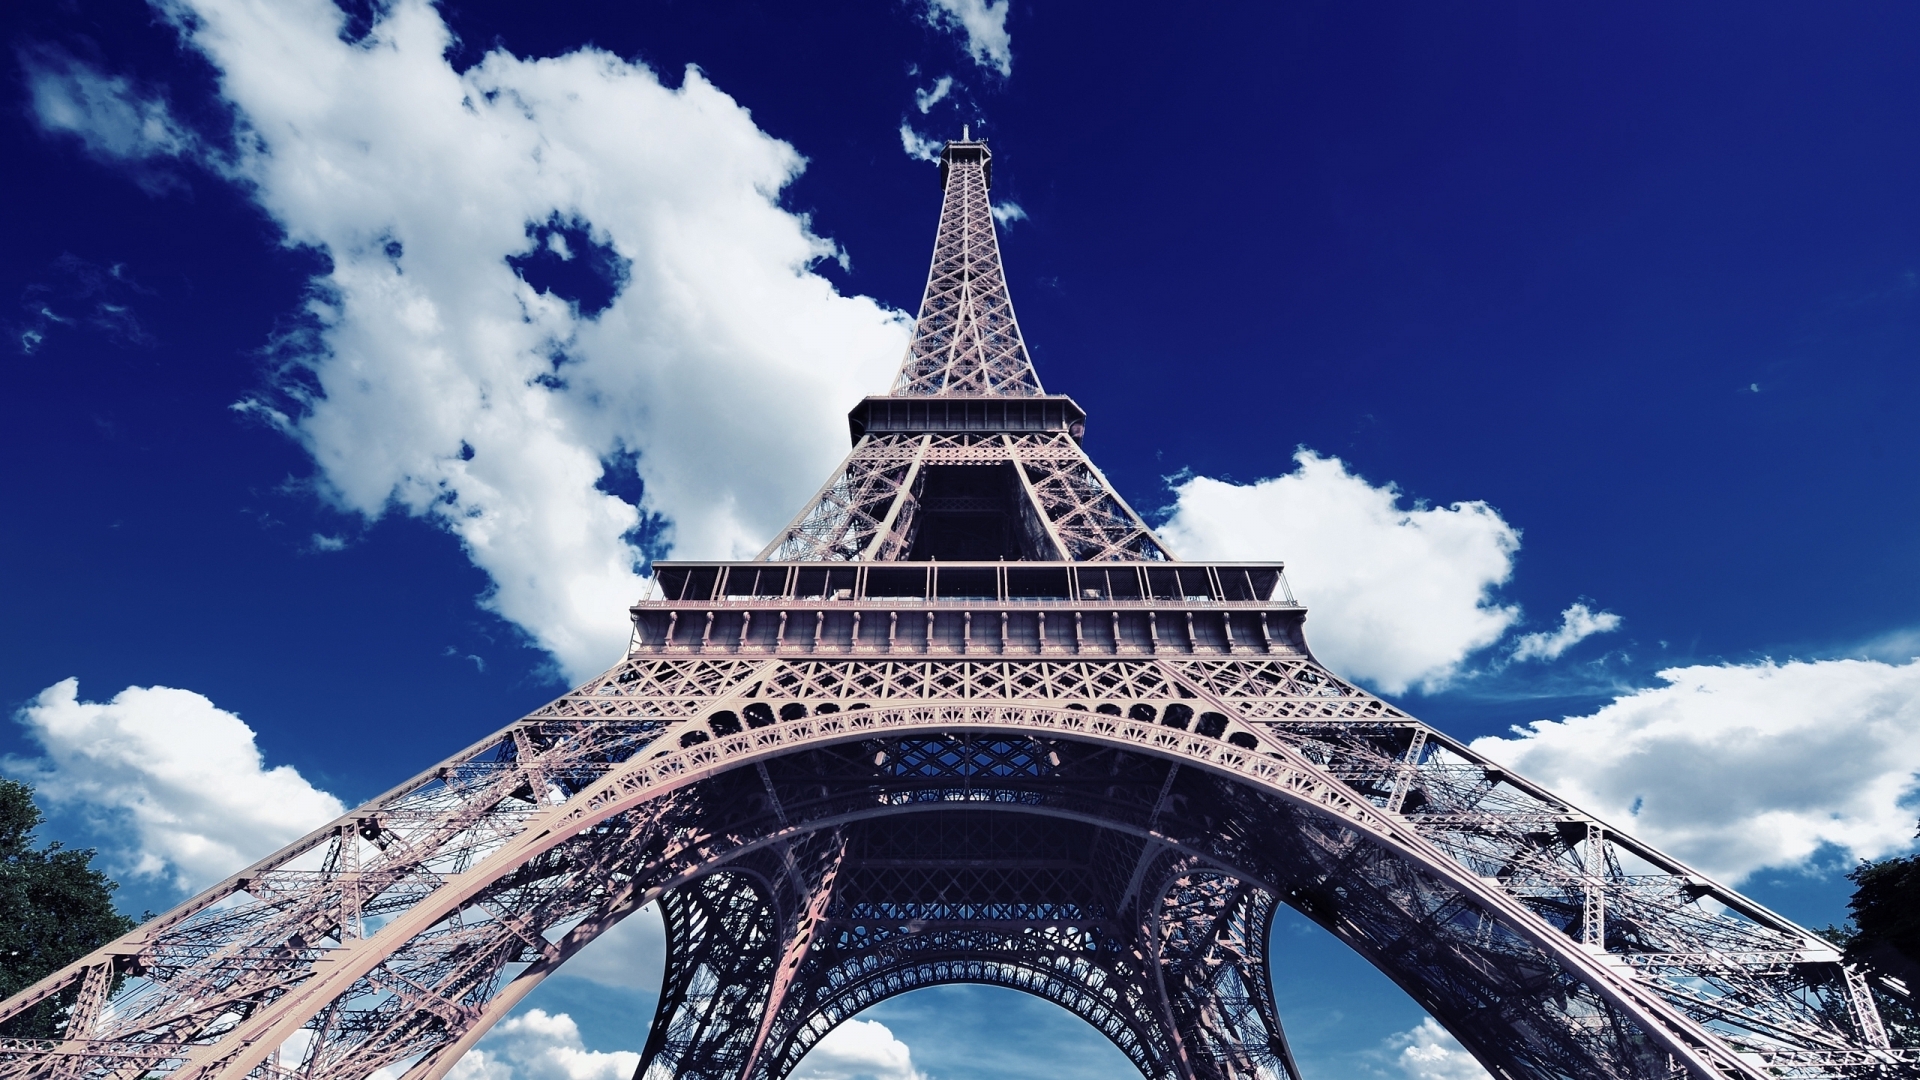 Eiffel Tower Paris for 1920 x 1080 HDTV 1080p resolution